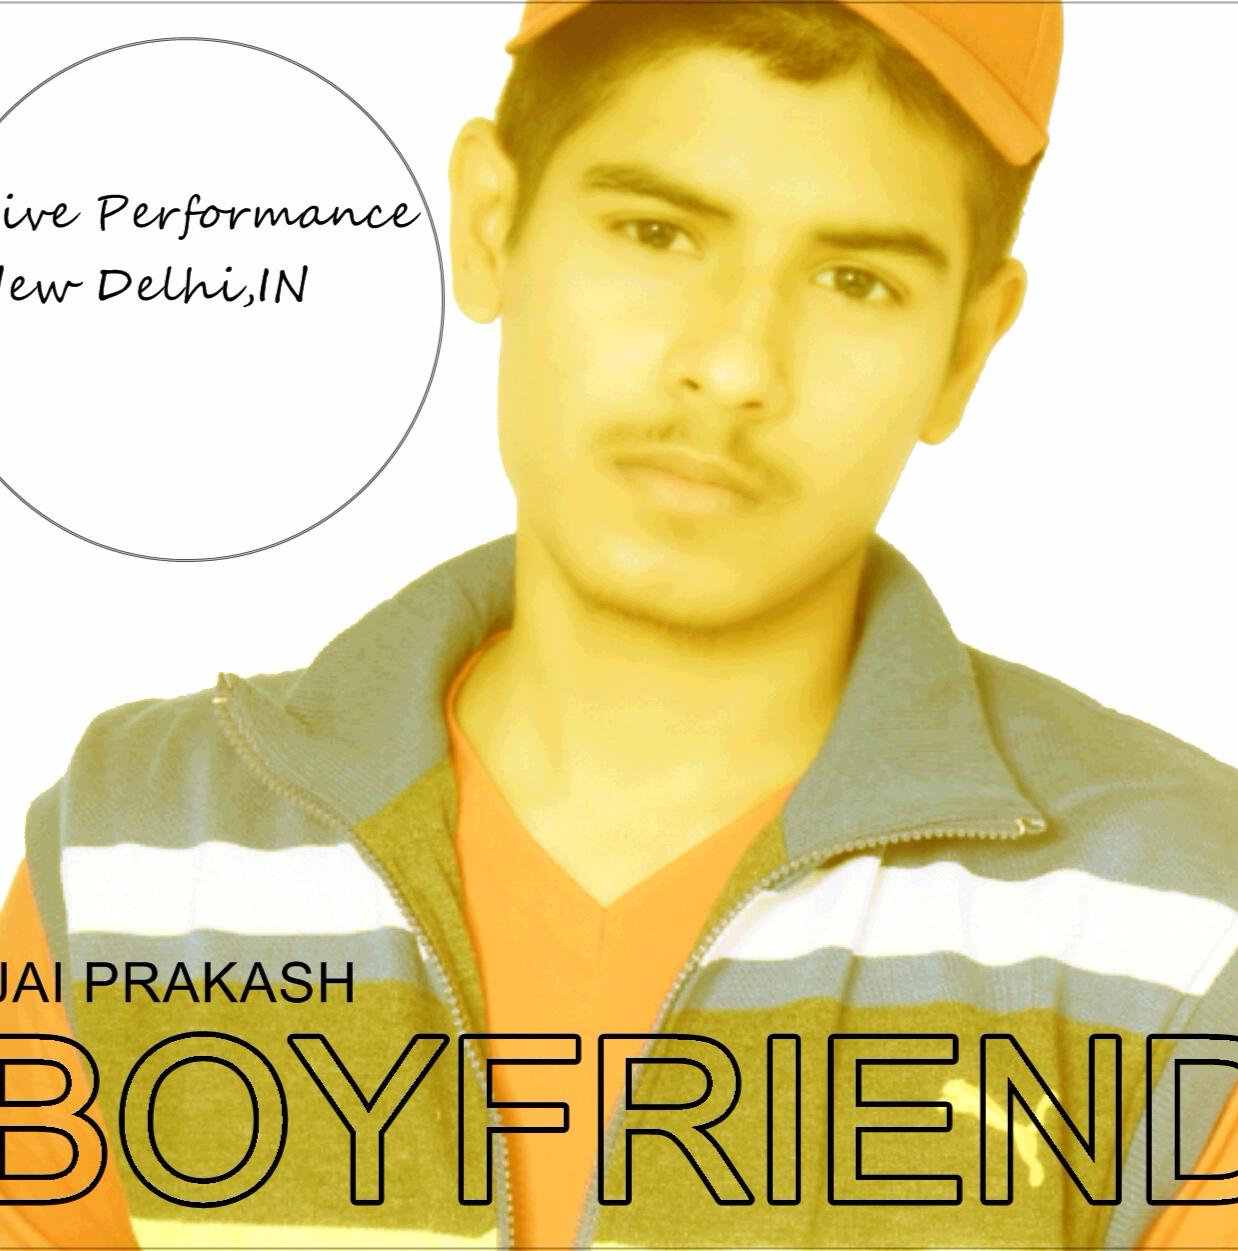 BoyFriend (Live in India) (Justin Bieber Cover by JaiPrakashMusic)